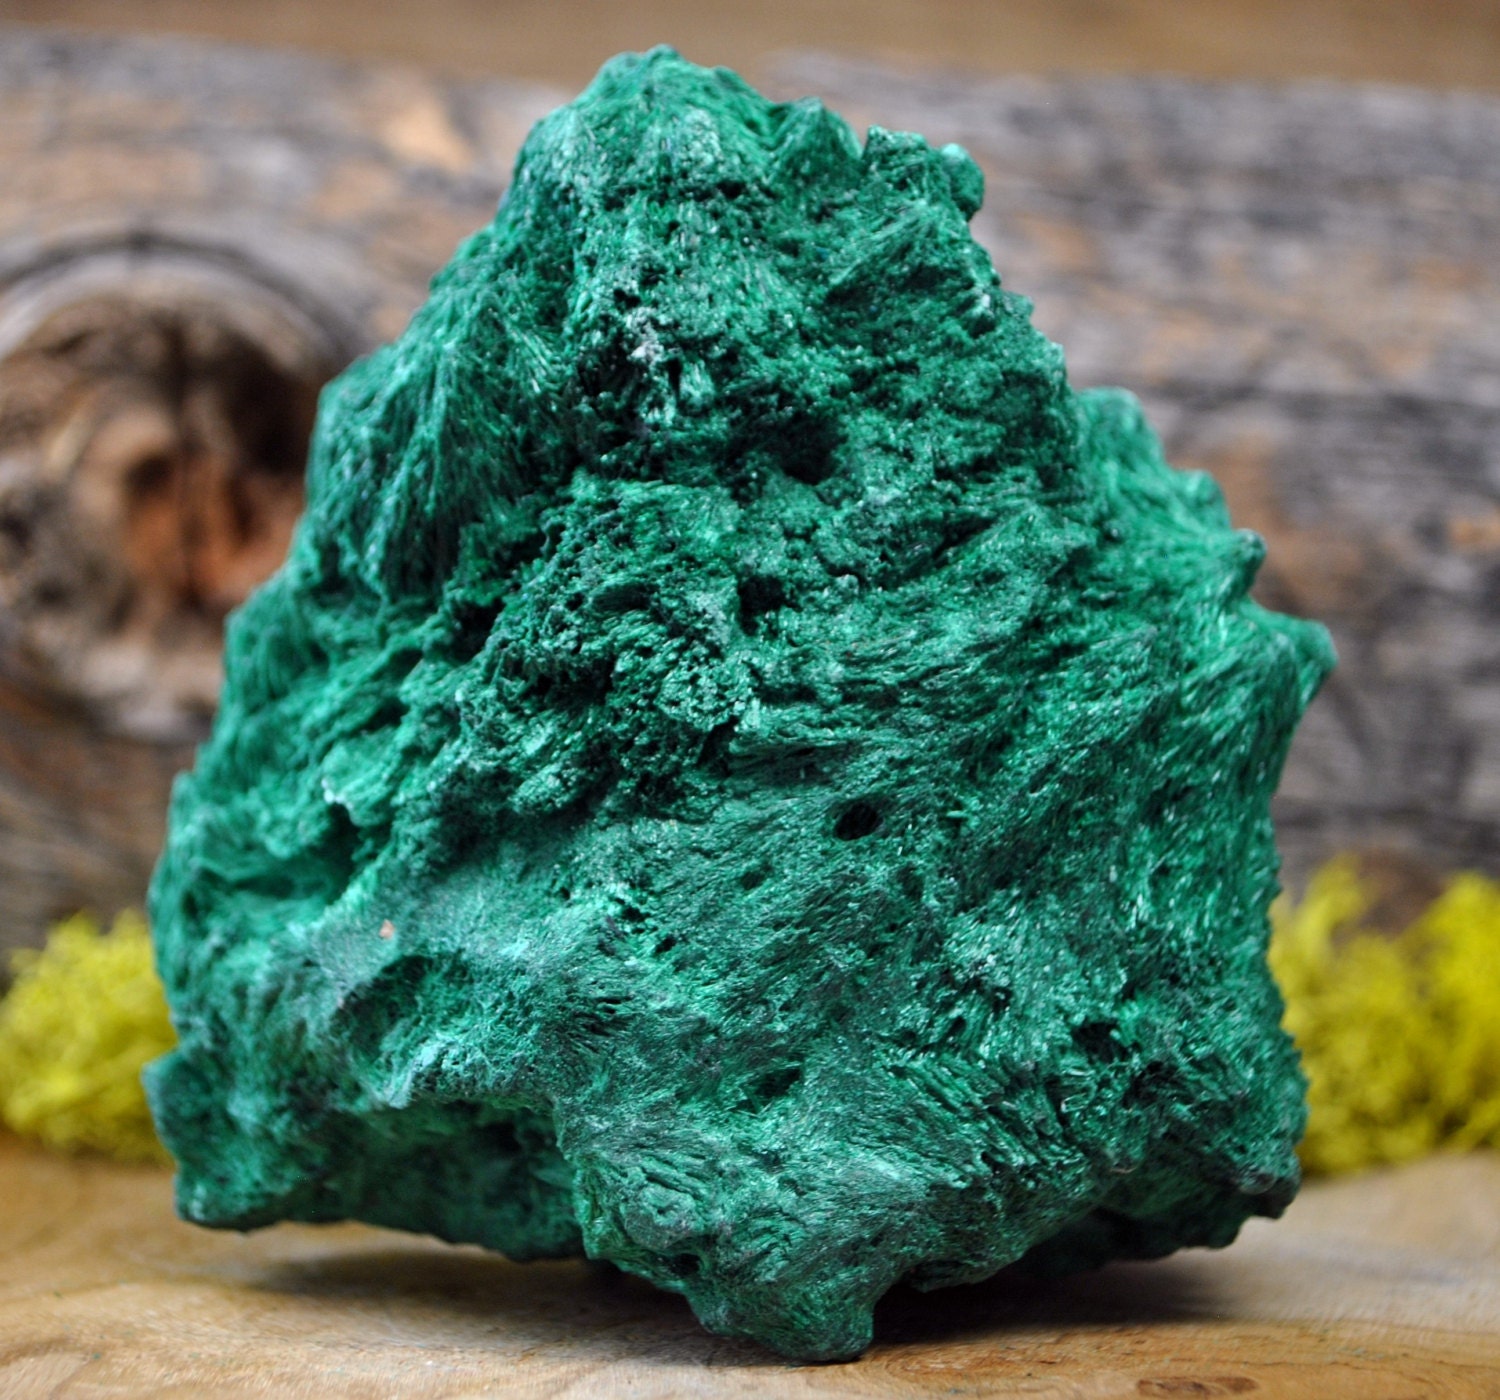 Fibrous Green Malachite Crystal Specimen 1240.19